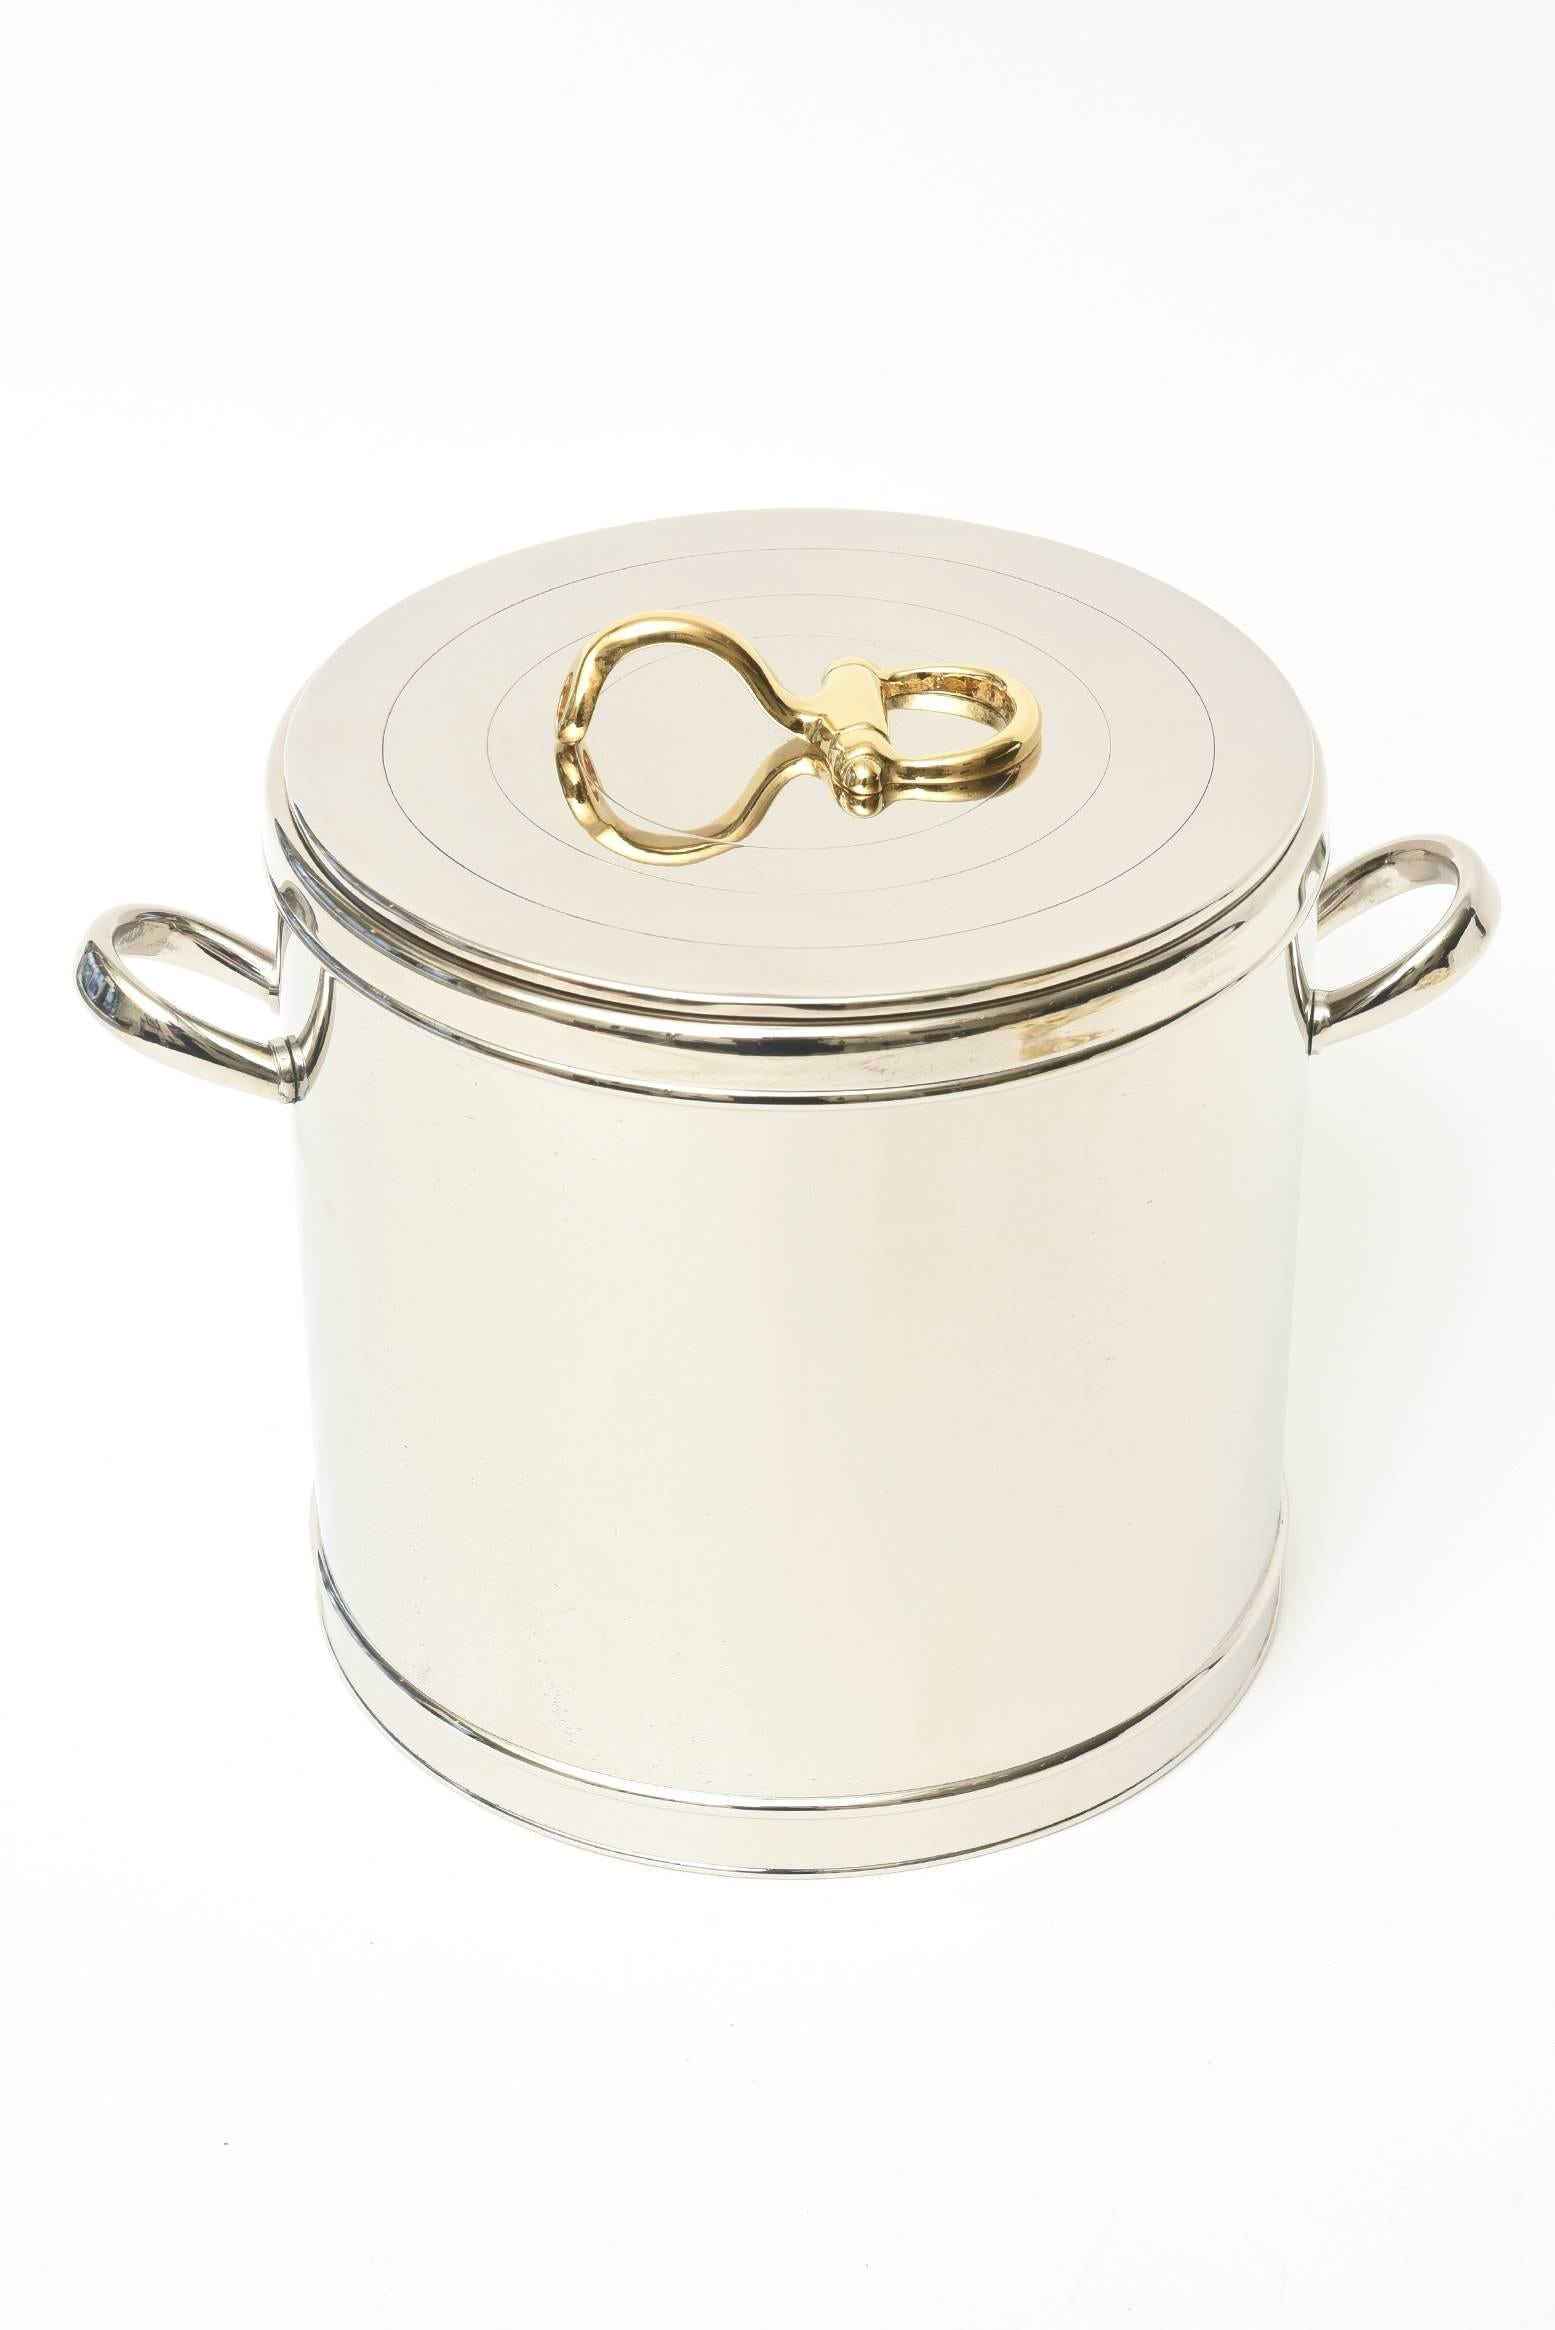 Modern Italian Vintage Gucci 22-Karat Gold Plate & Silver Plate Ice Bucket /Barware 